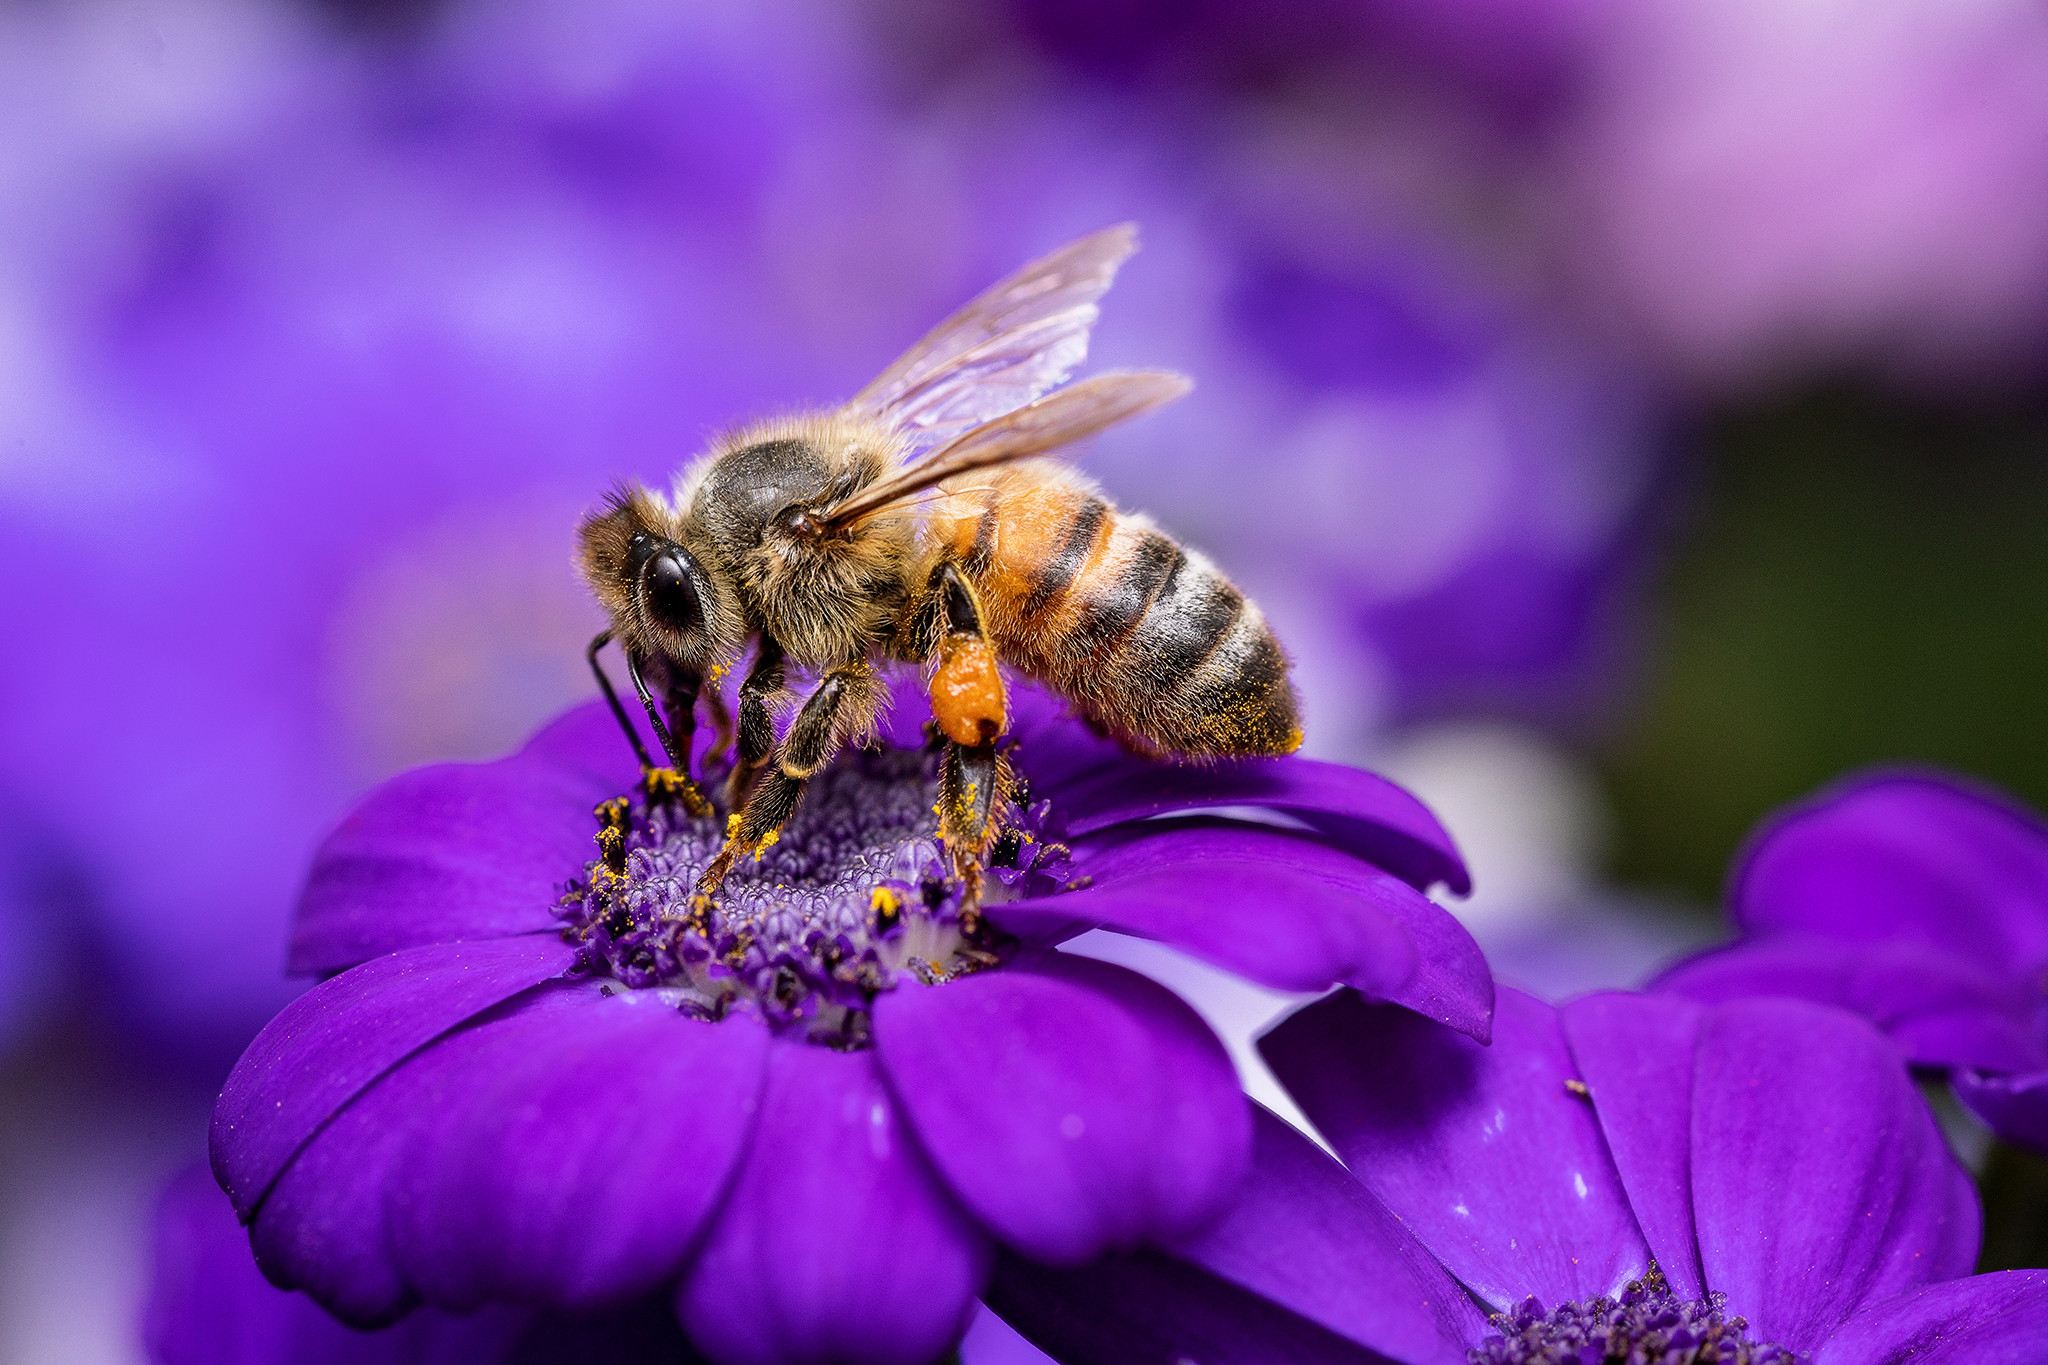 A honey bee on a flower. CREDIT CRAIG LOECHEL